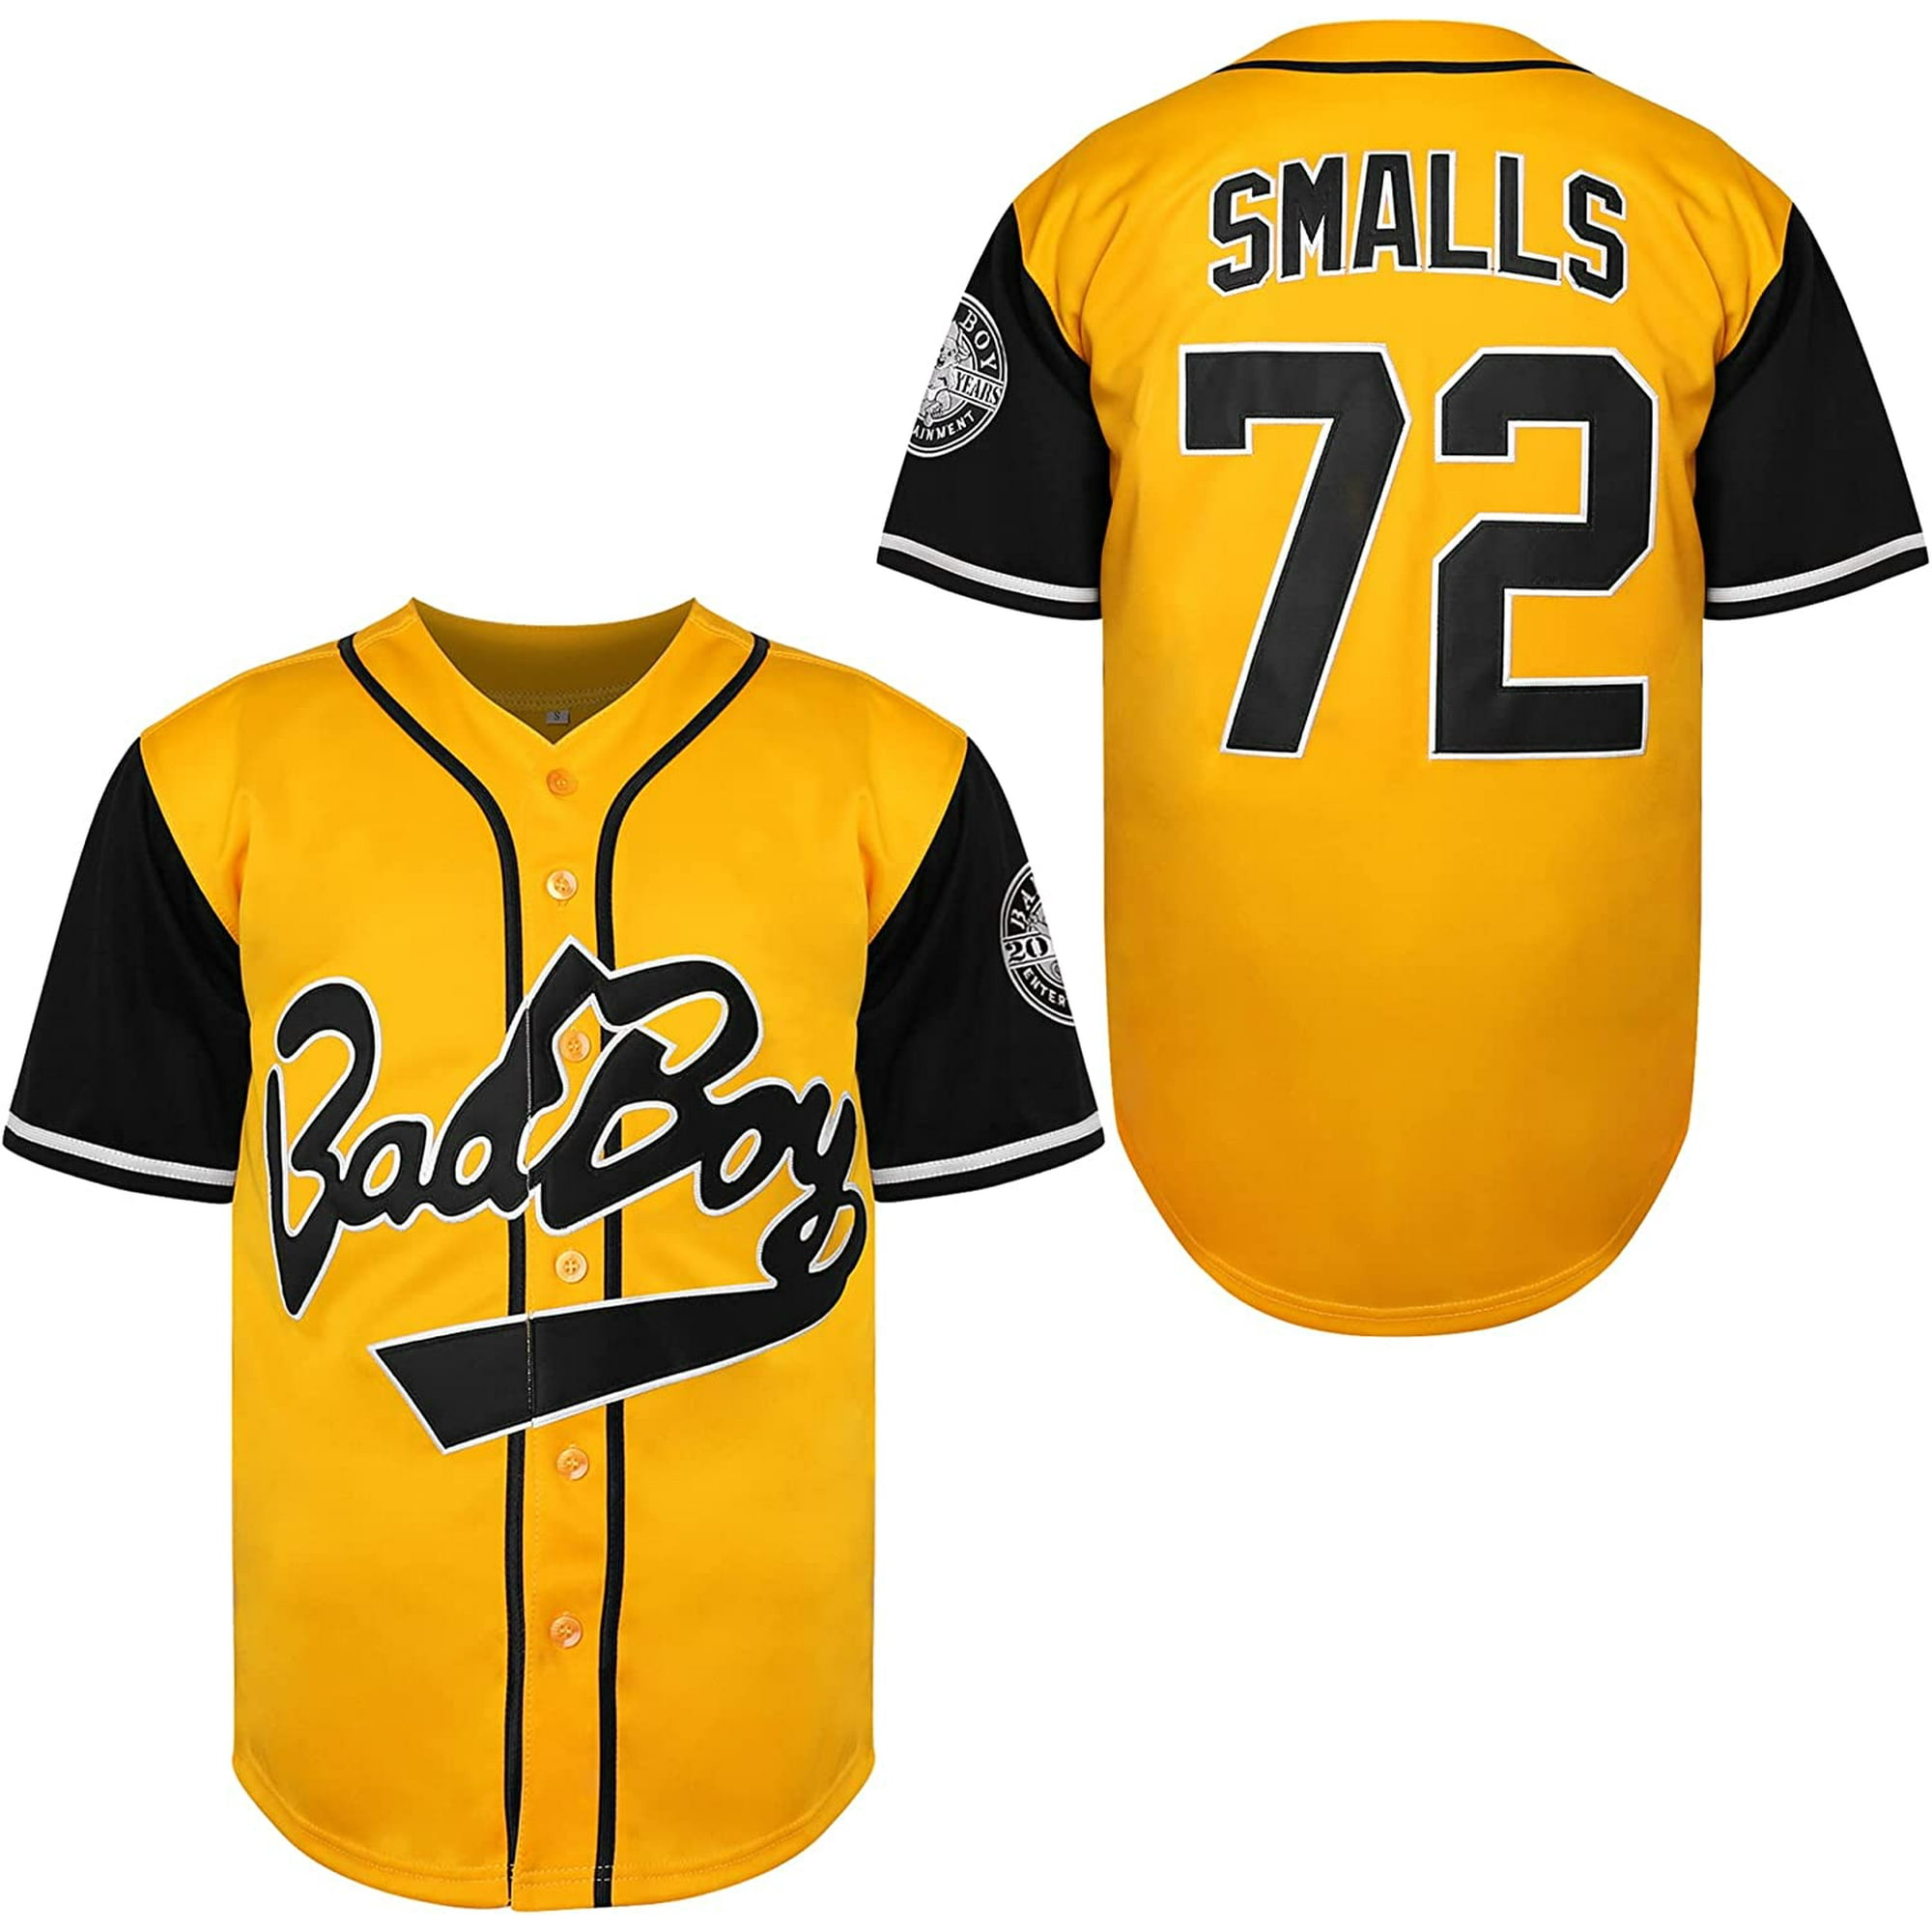 biggie smalls baseball jersey